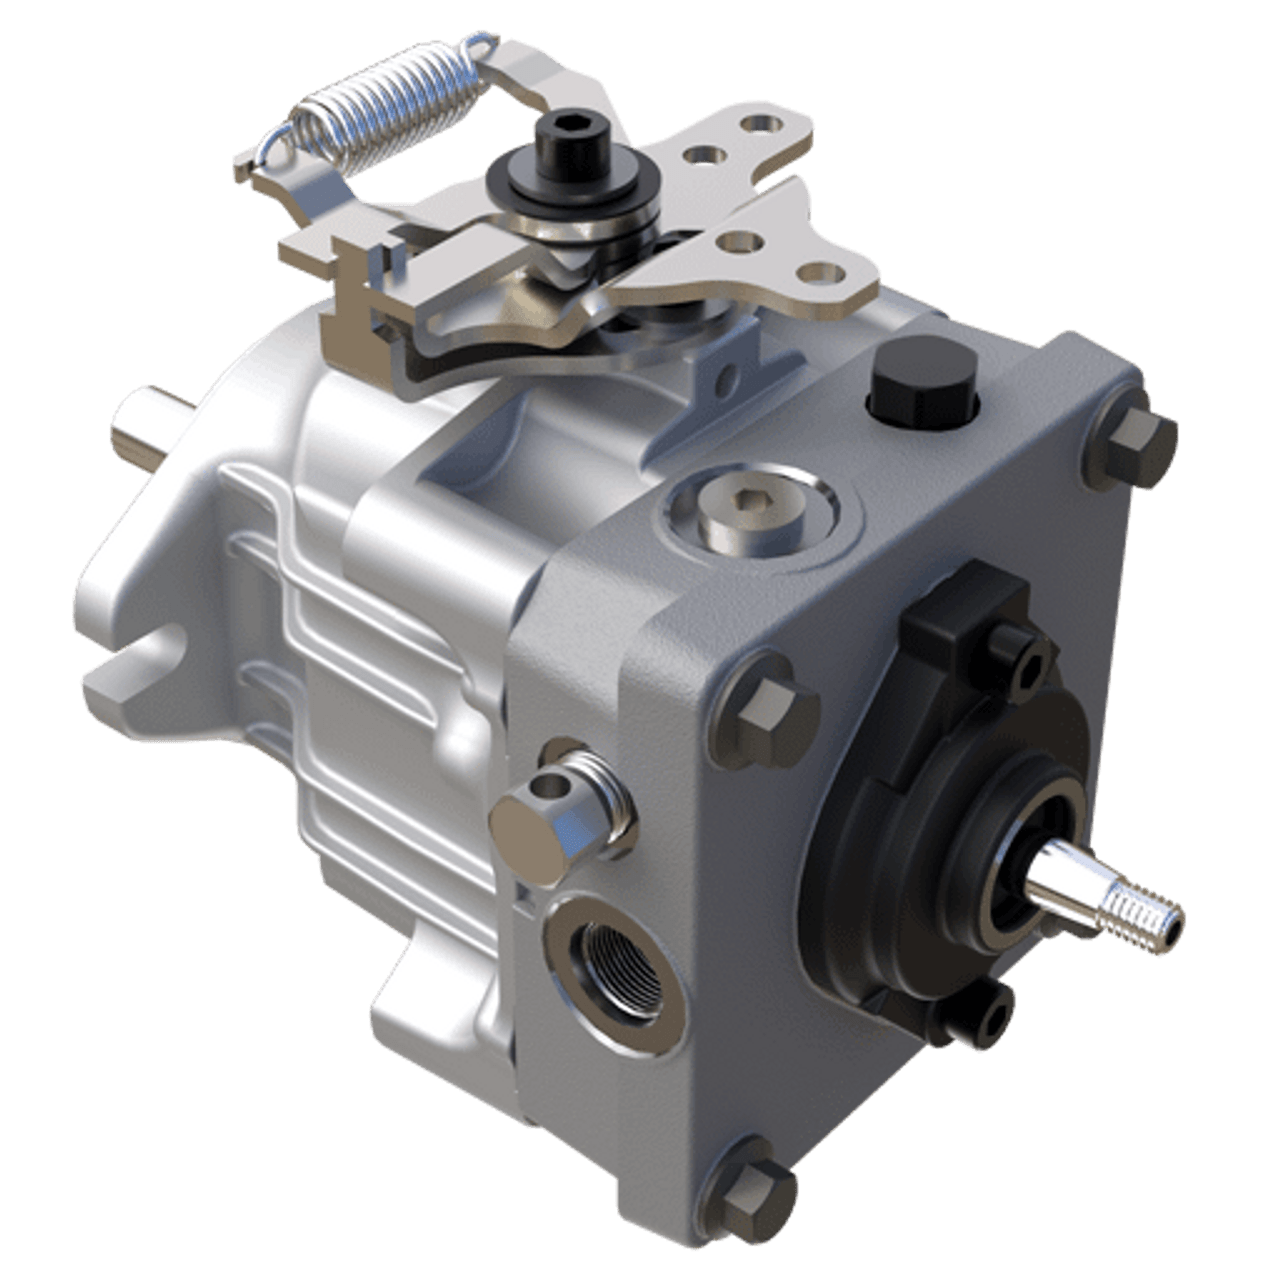 Hydro Gear PG-1GCC-DY1X-XXXX Hydraulic Pump P Series | Original OEM Part | Free Shipping - LawnMowerPartsWorld.com